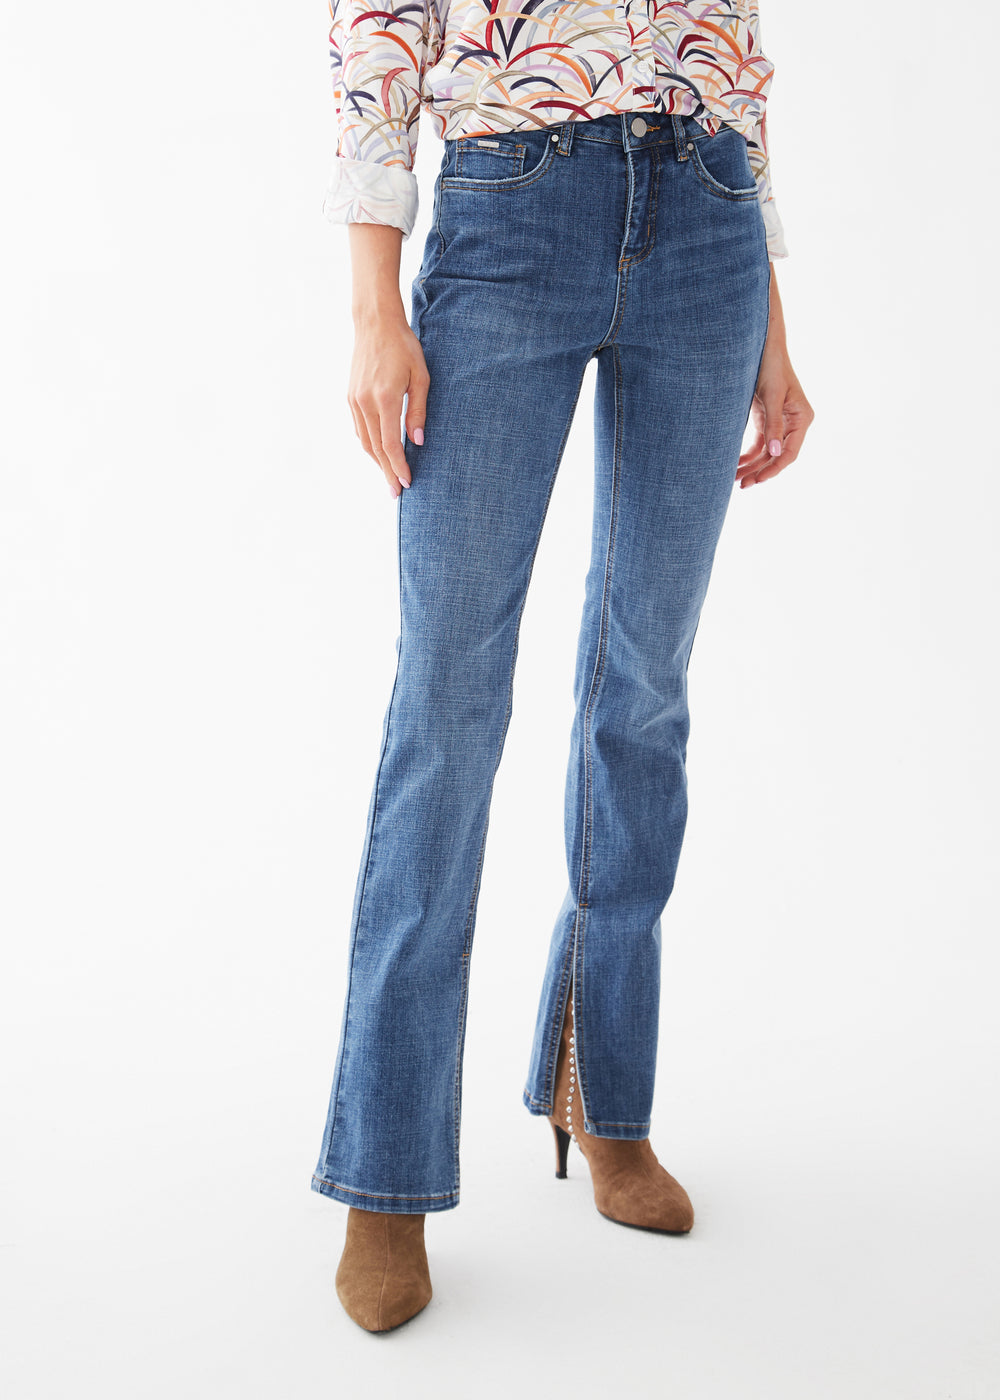 FDJ Olivia bootcut jeans 2182809, side-slit hem SALE 4, 6